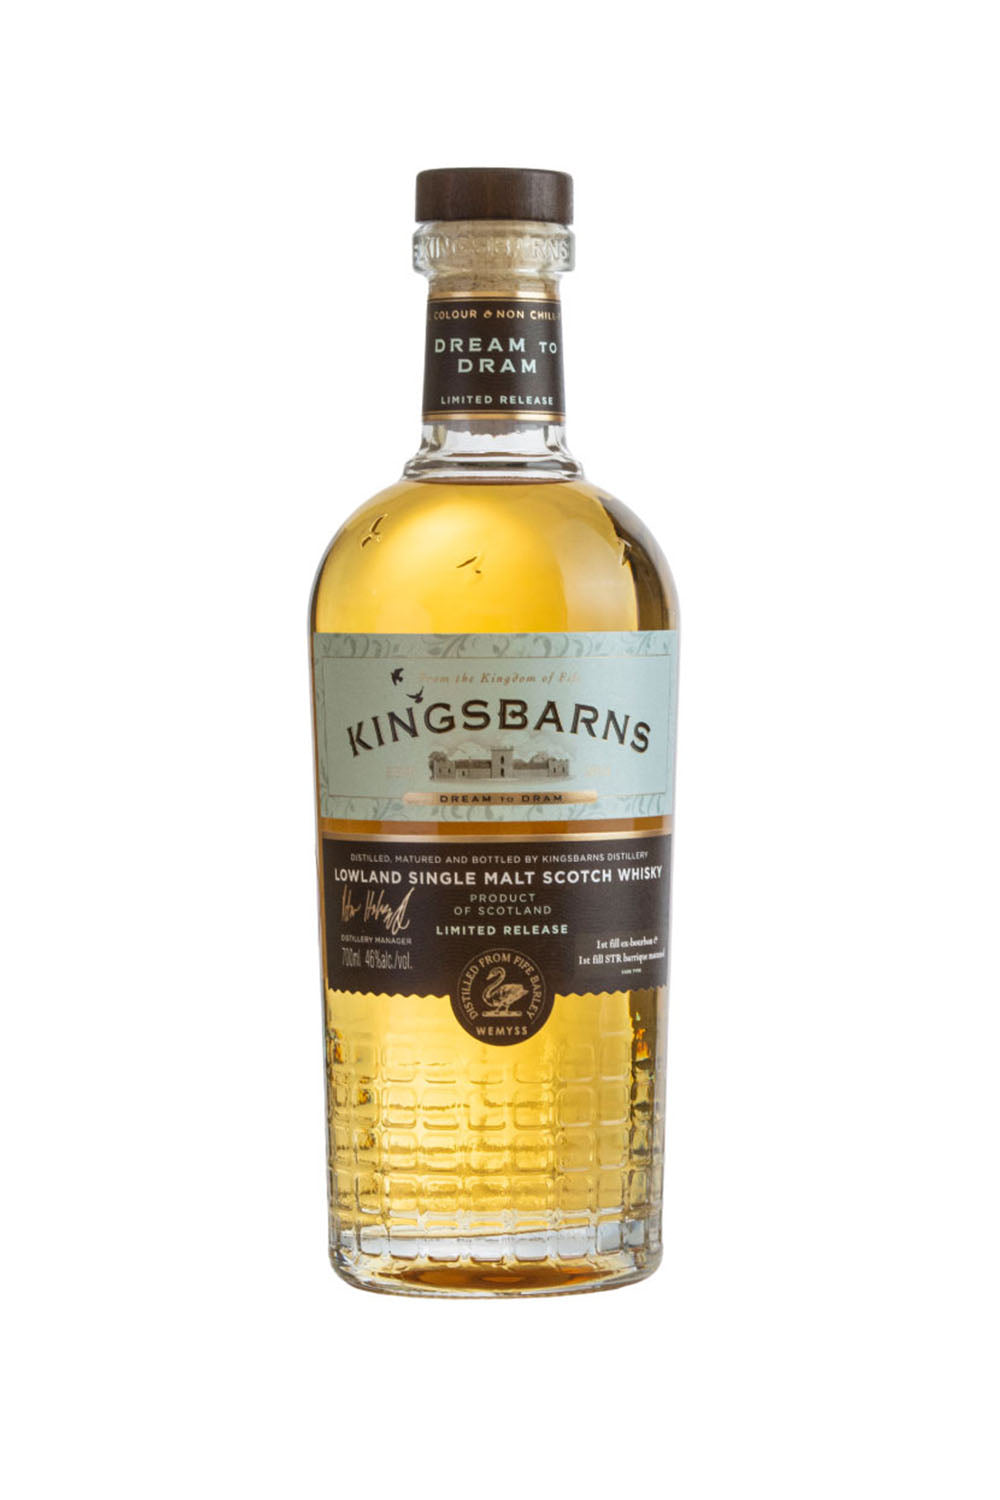 Kingsbarns "Dream to Dram" Single Malt Scotch Whisky